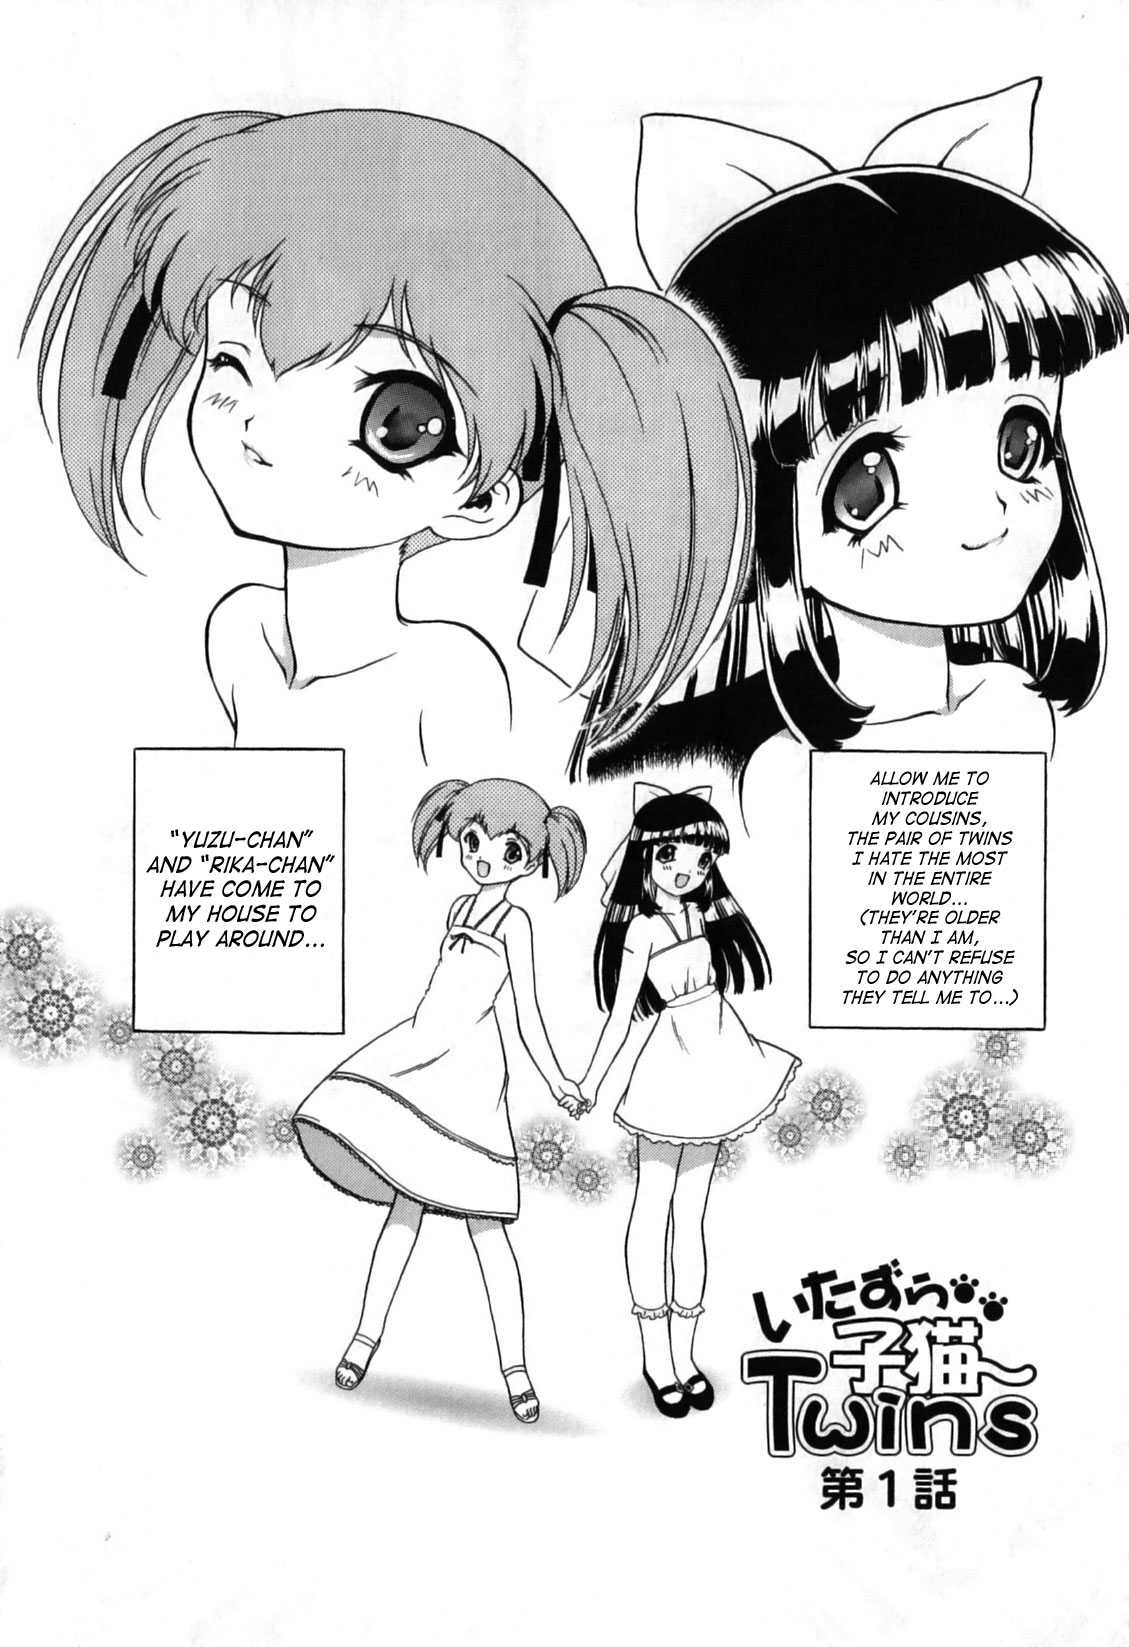 [SaHa] Nanjou Asuka - Itazura Koneko Twins ENG 